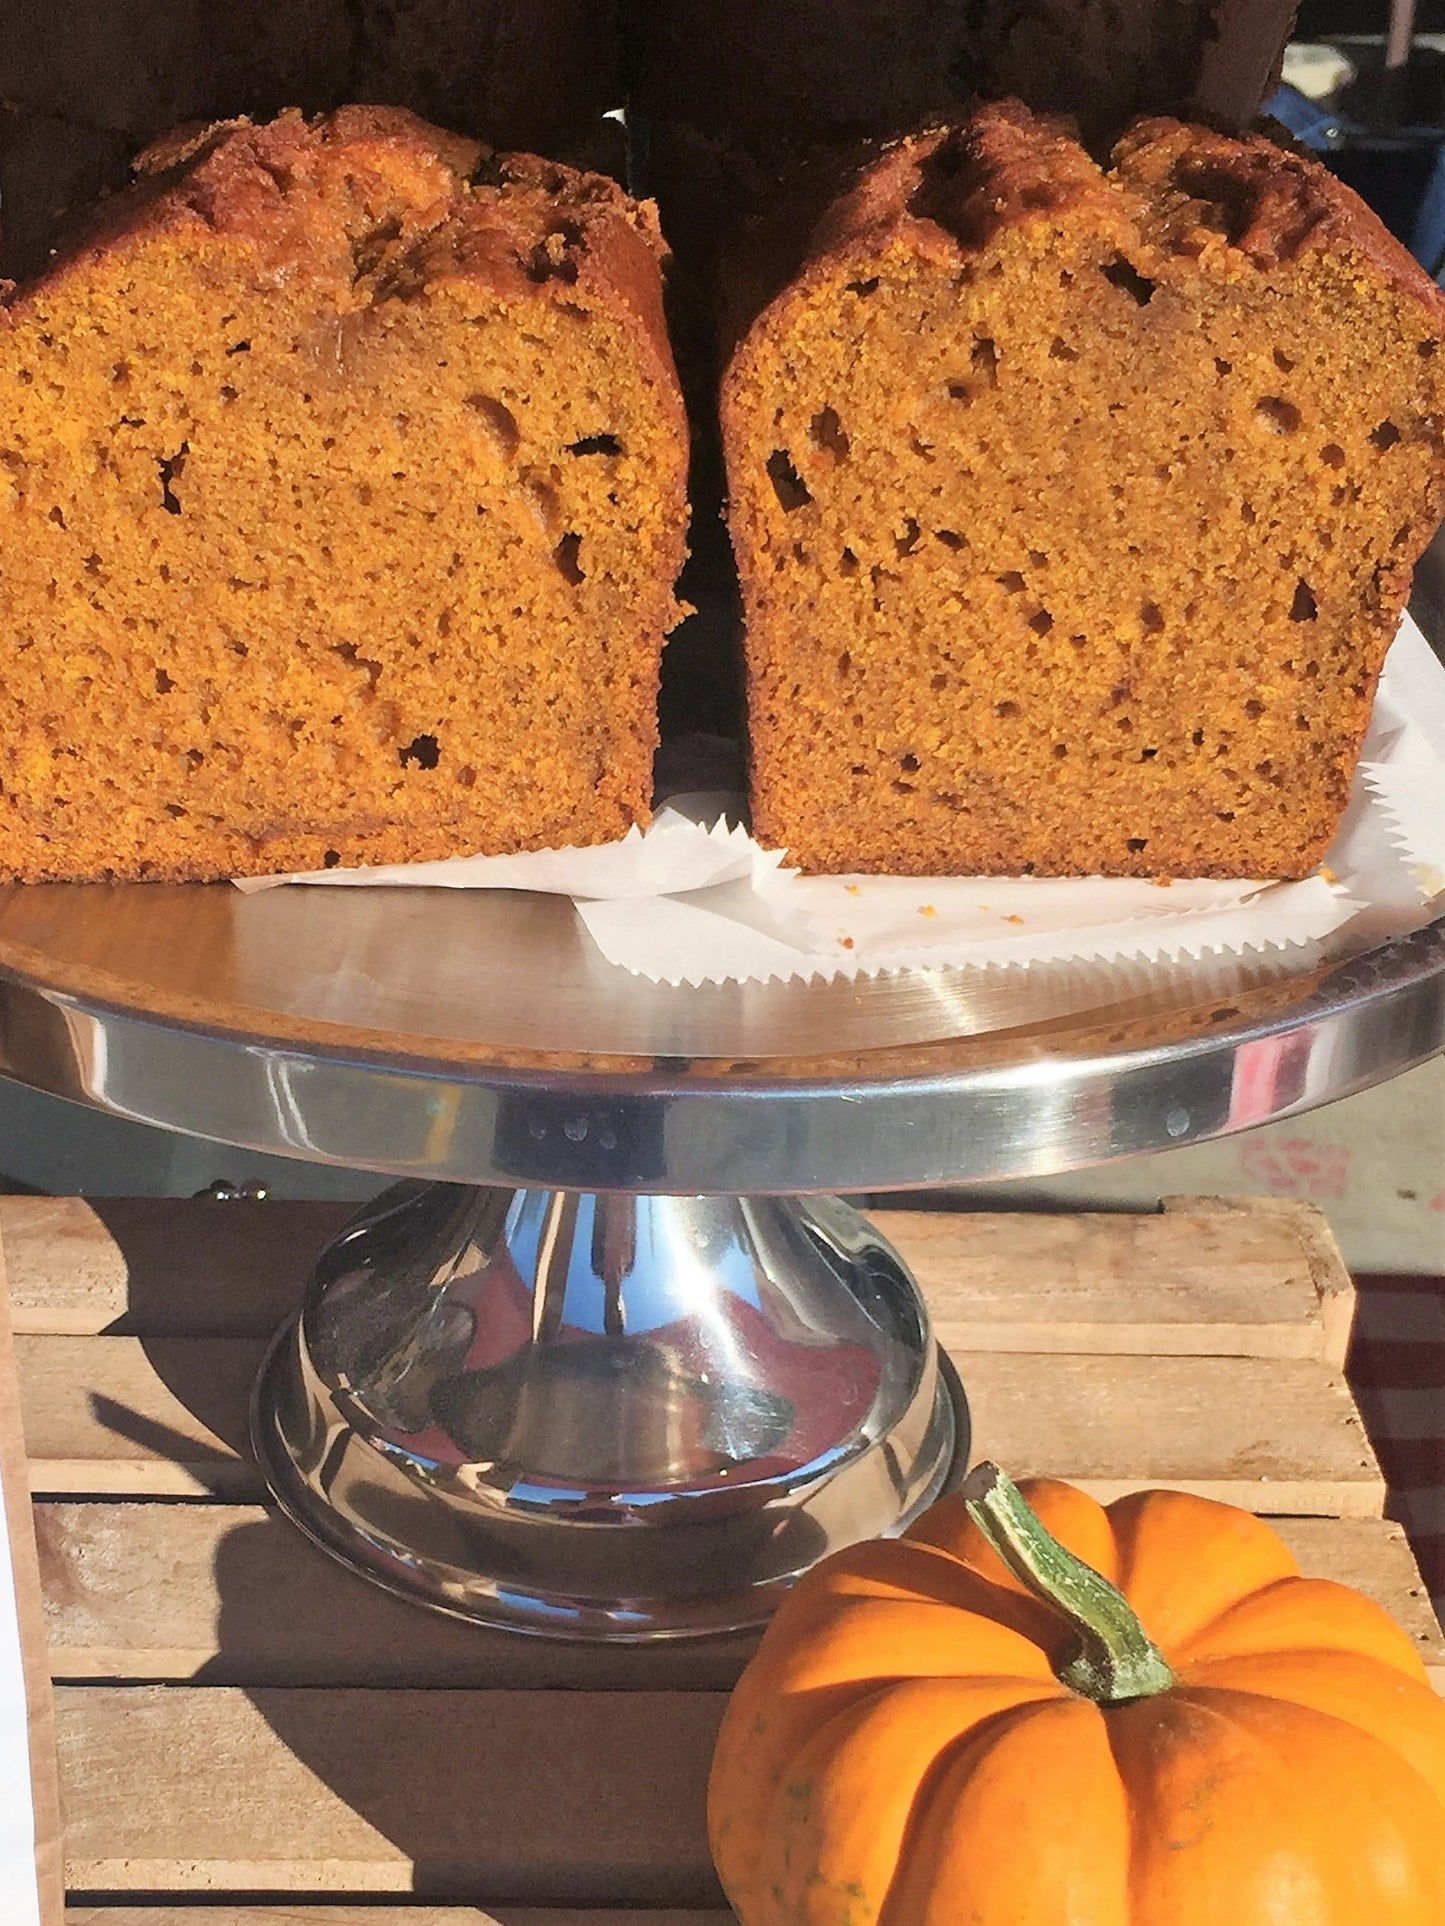 11/22 Thanksgiving Bake - Large Loaf Pumpkin Bread (Plain, Raisin, or Chocolate Chip)